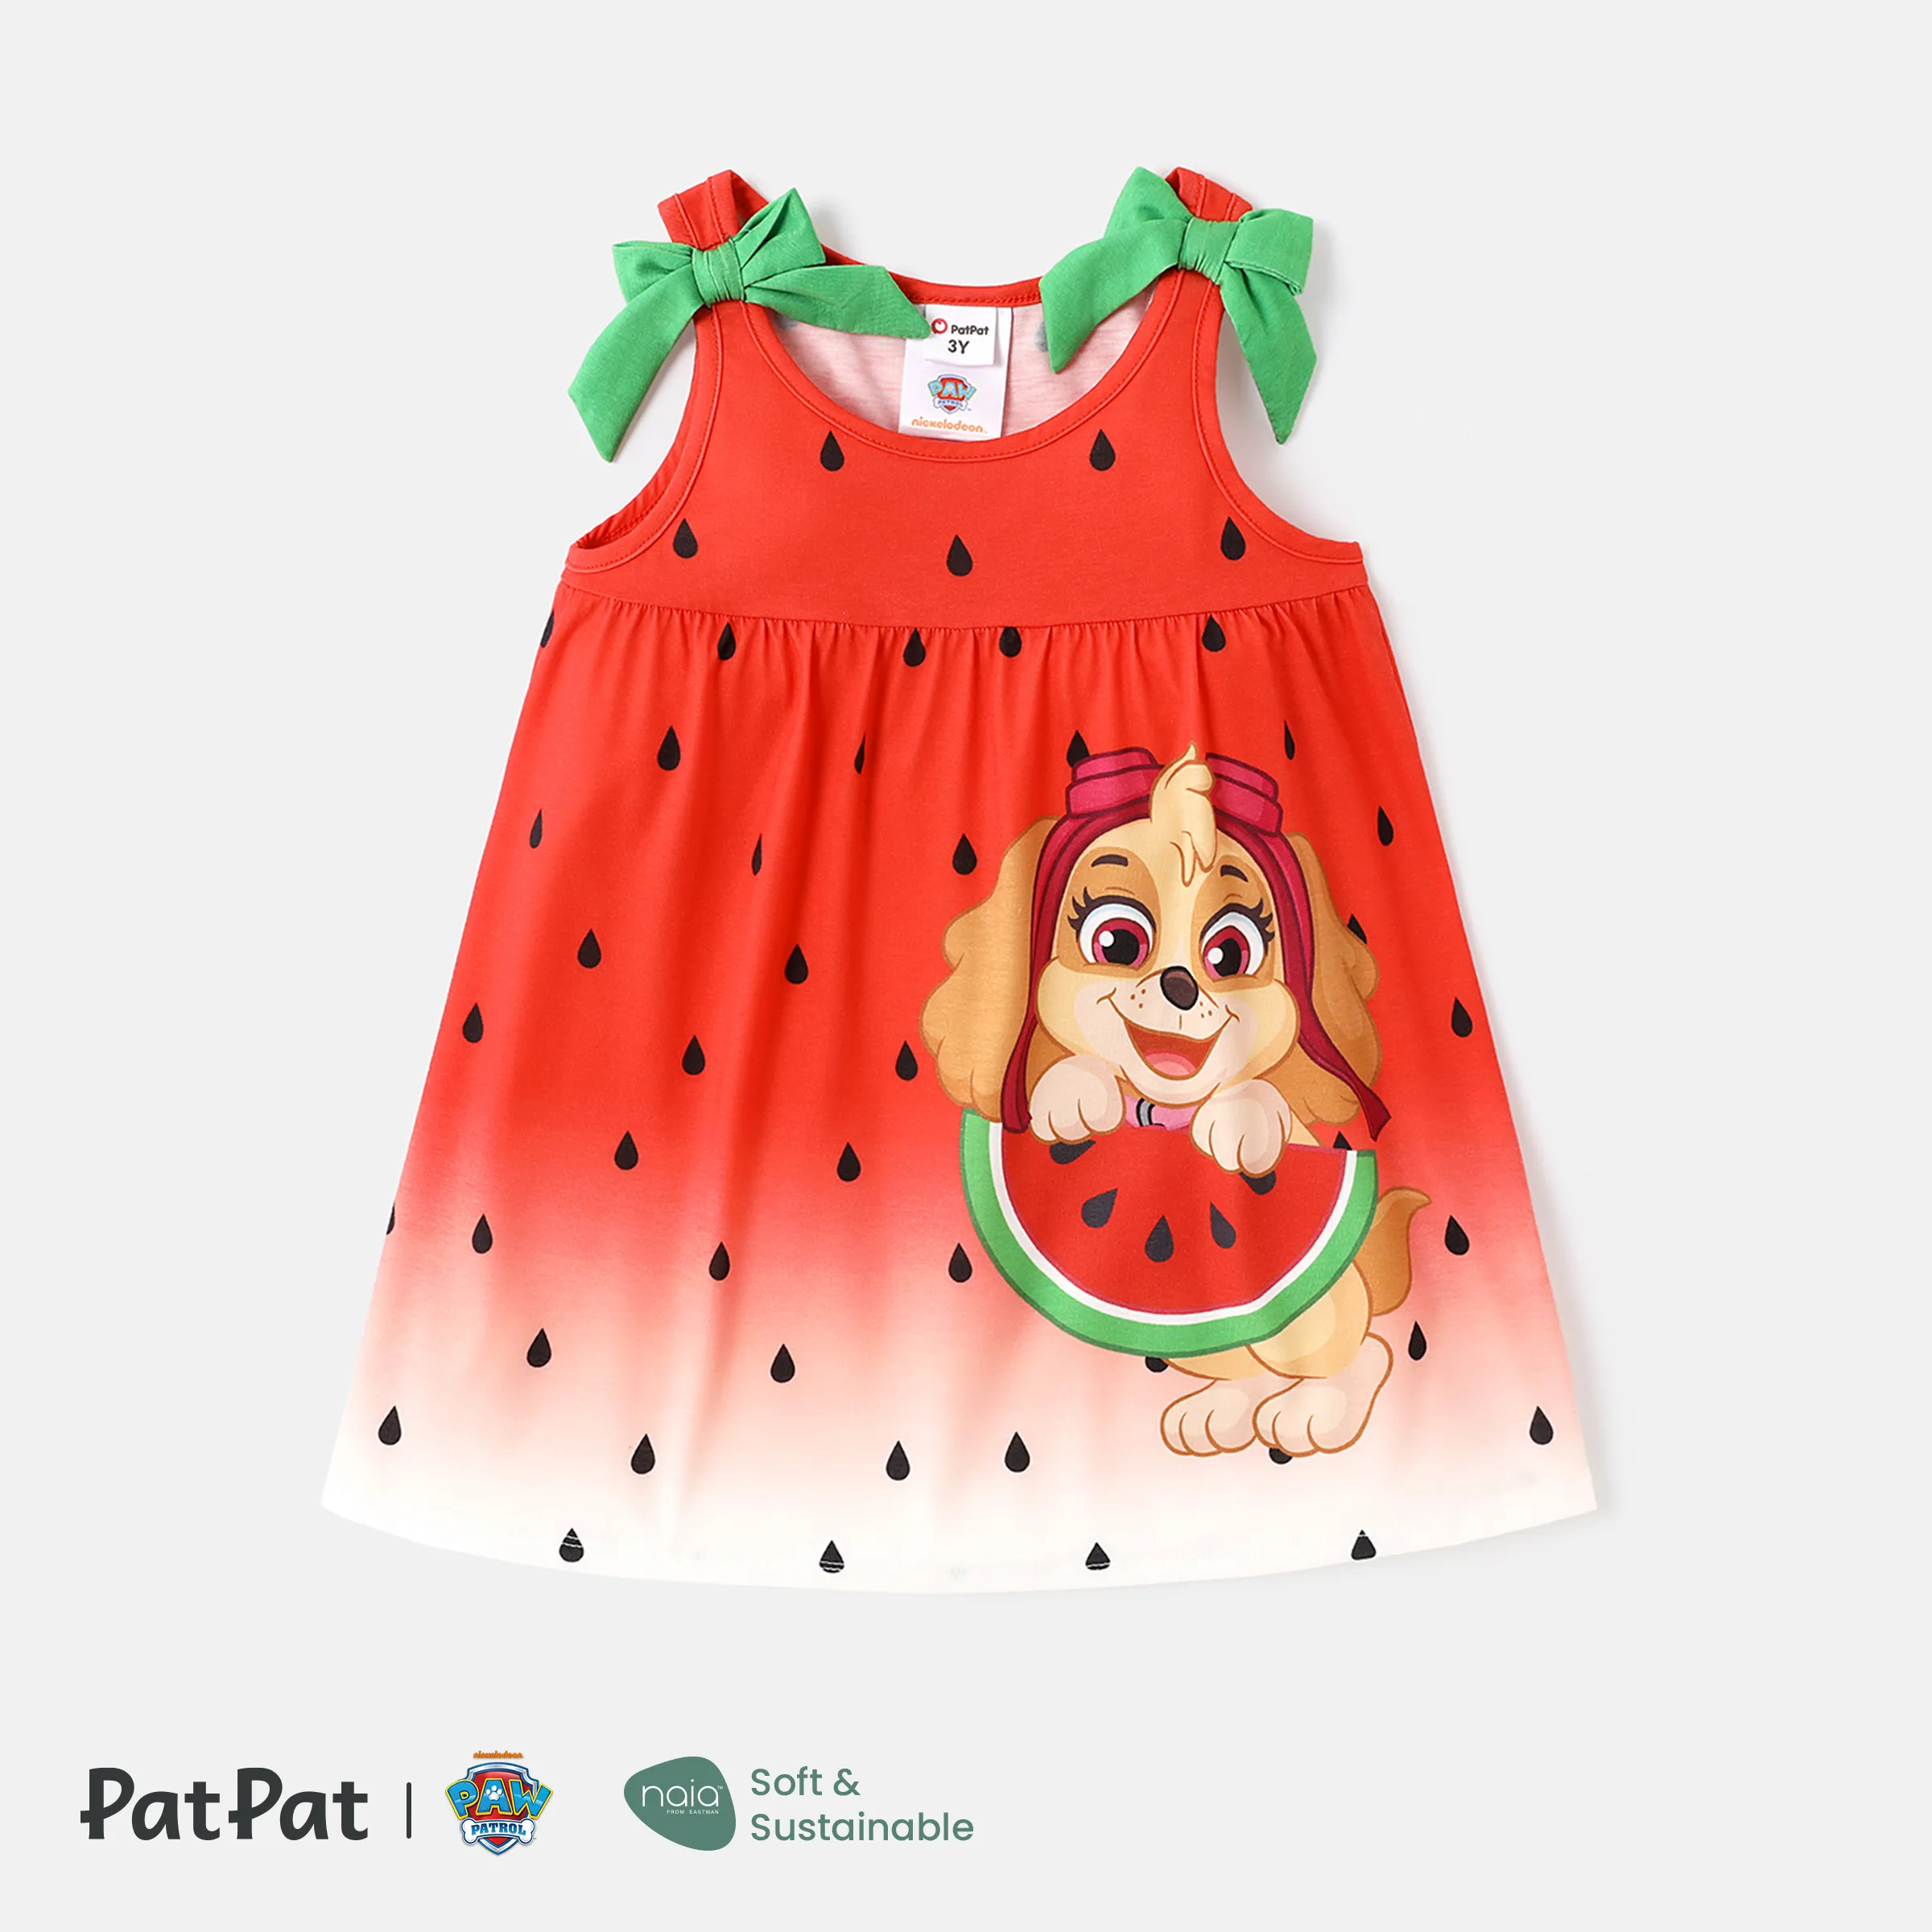 PAW Patrol Toddler Girls 1pc Naiatm Watermelon Print Bowknot Design Sleeveless Dress